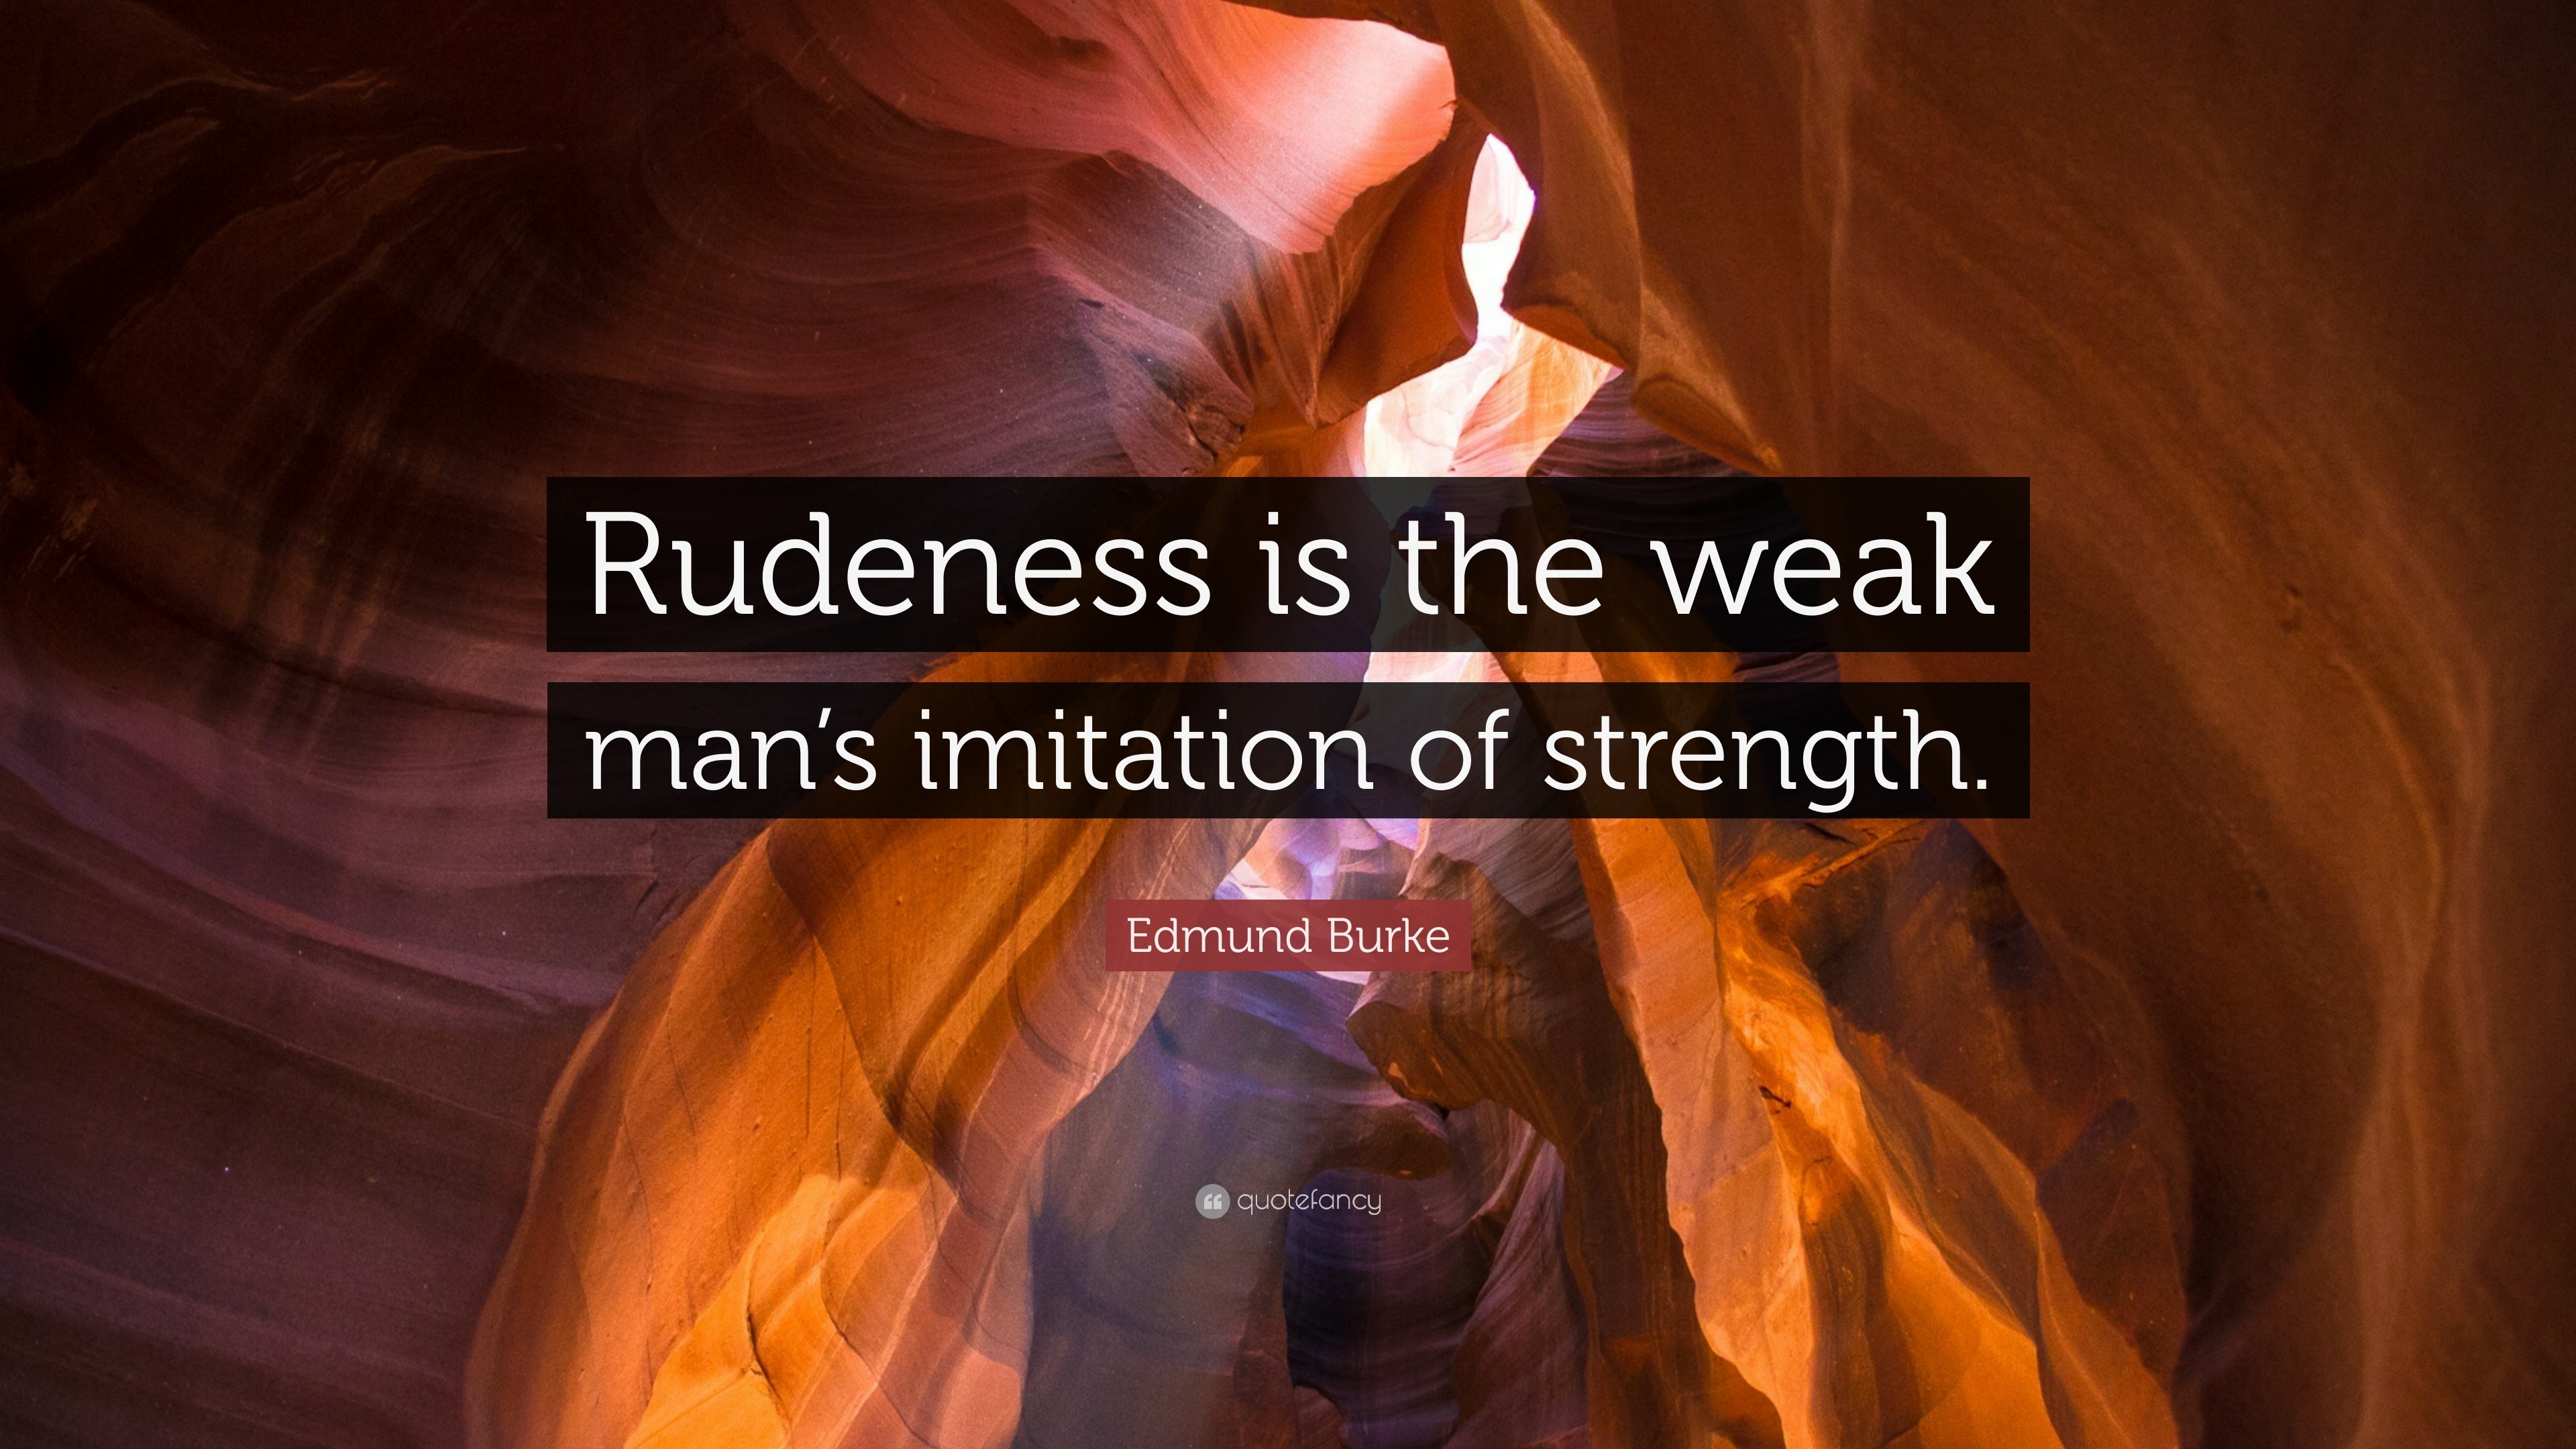 "rudeness is the weak man"s imitation of strength.